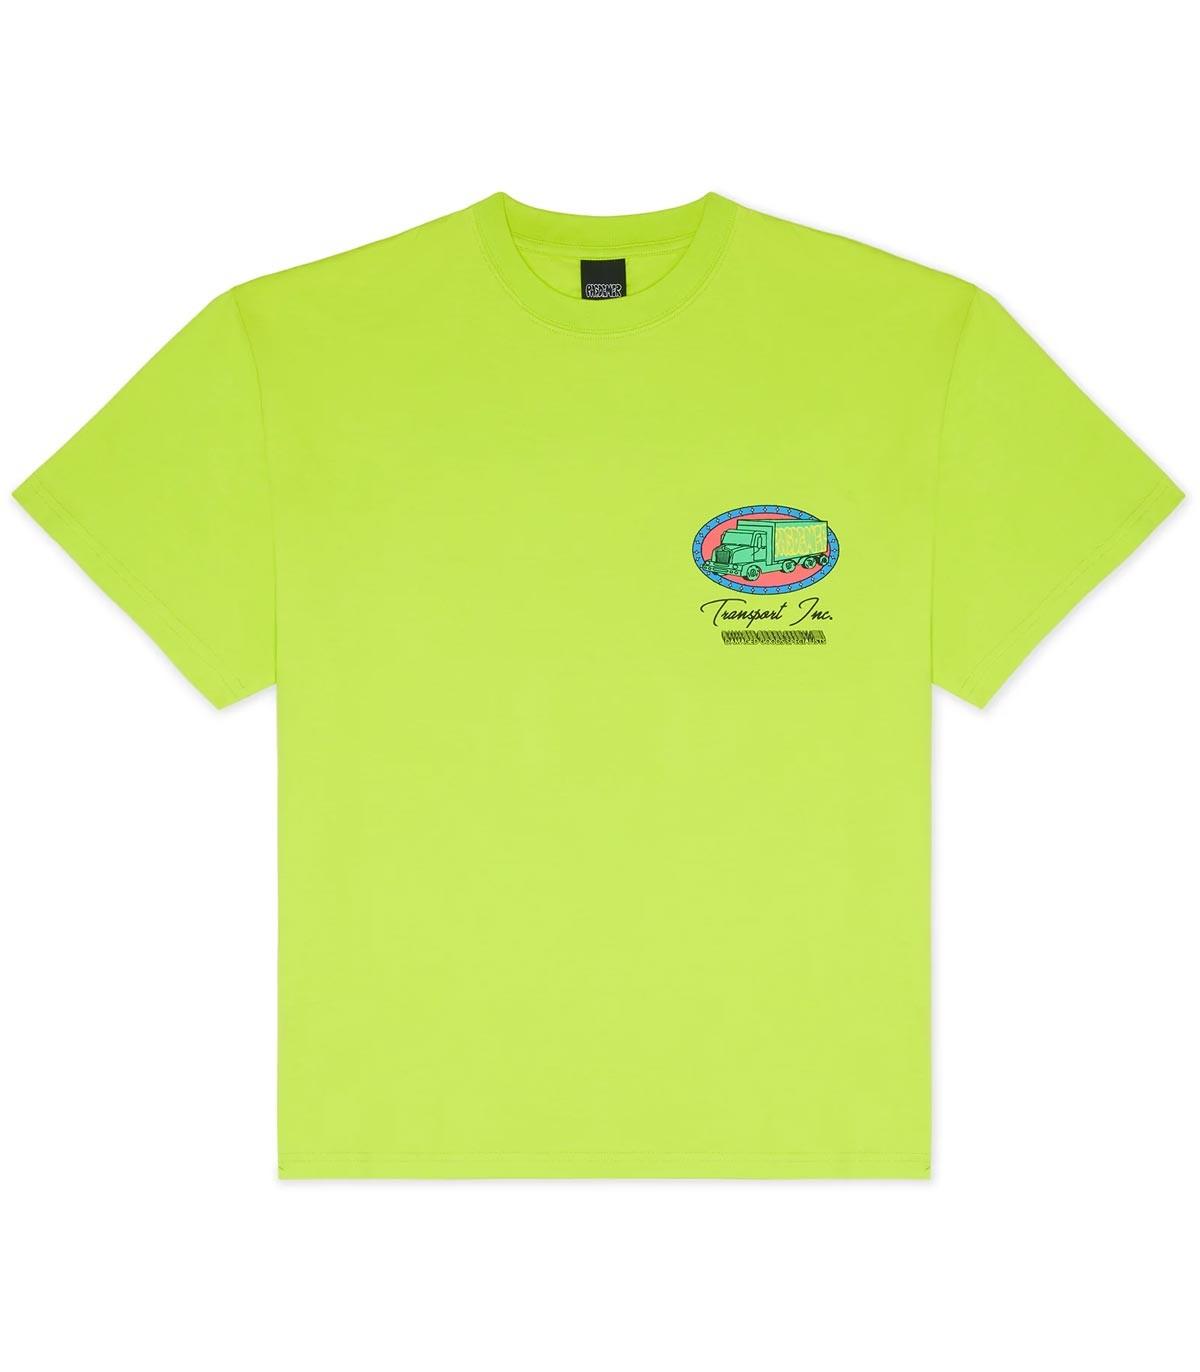 PASDEMER - Camiseta Transport - Verde